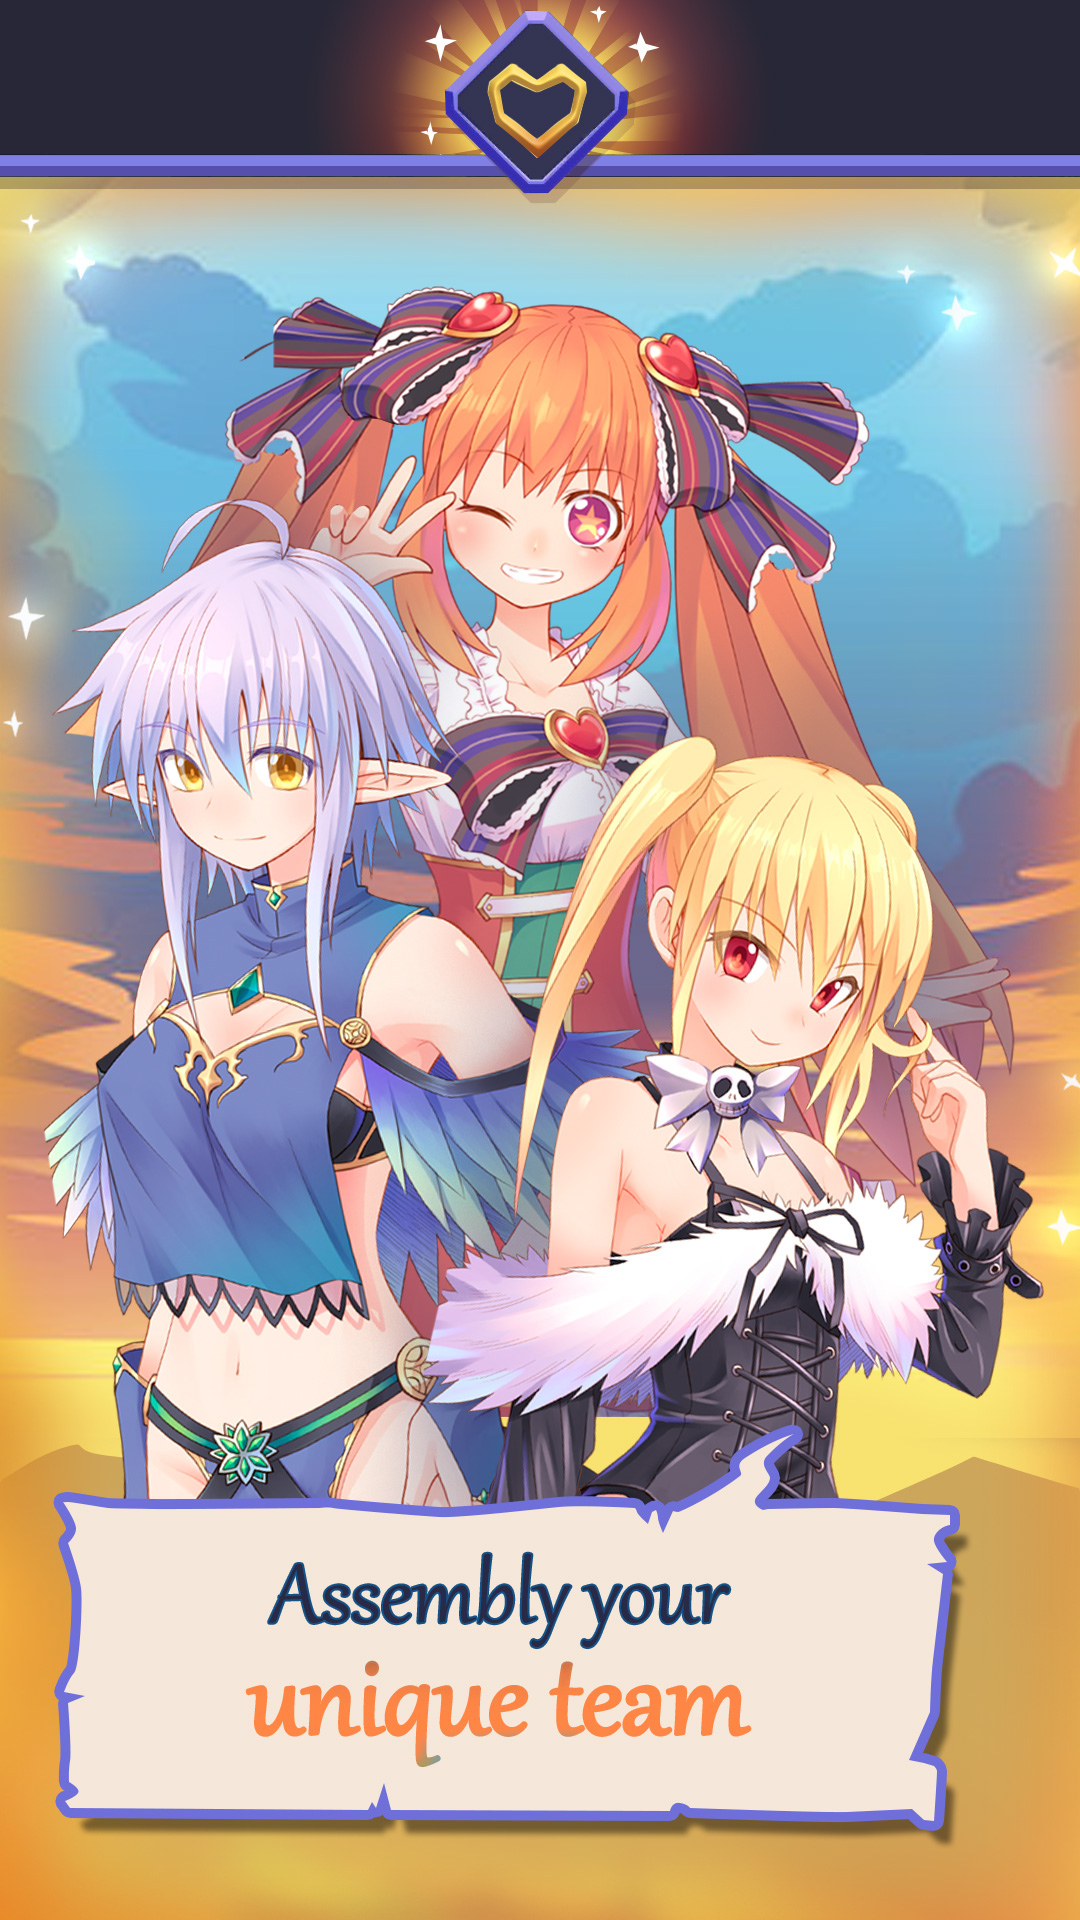 Download Fantasy town: Anime girls story für Android kostenlos.